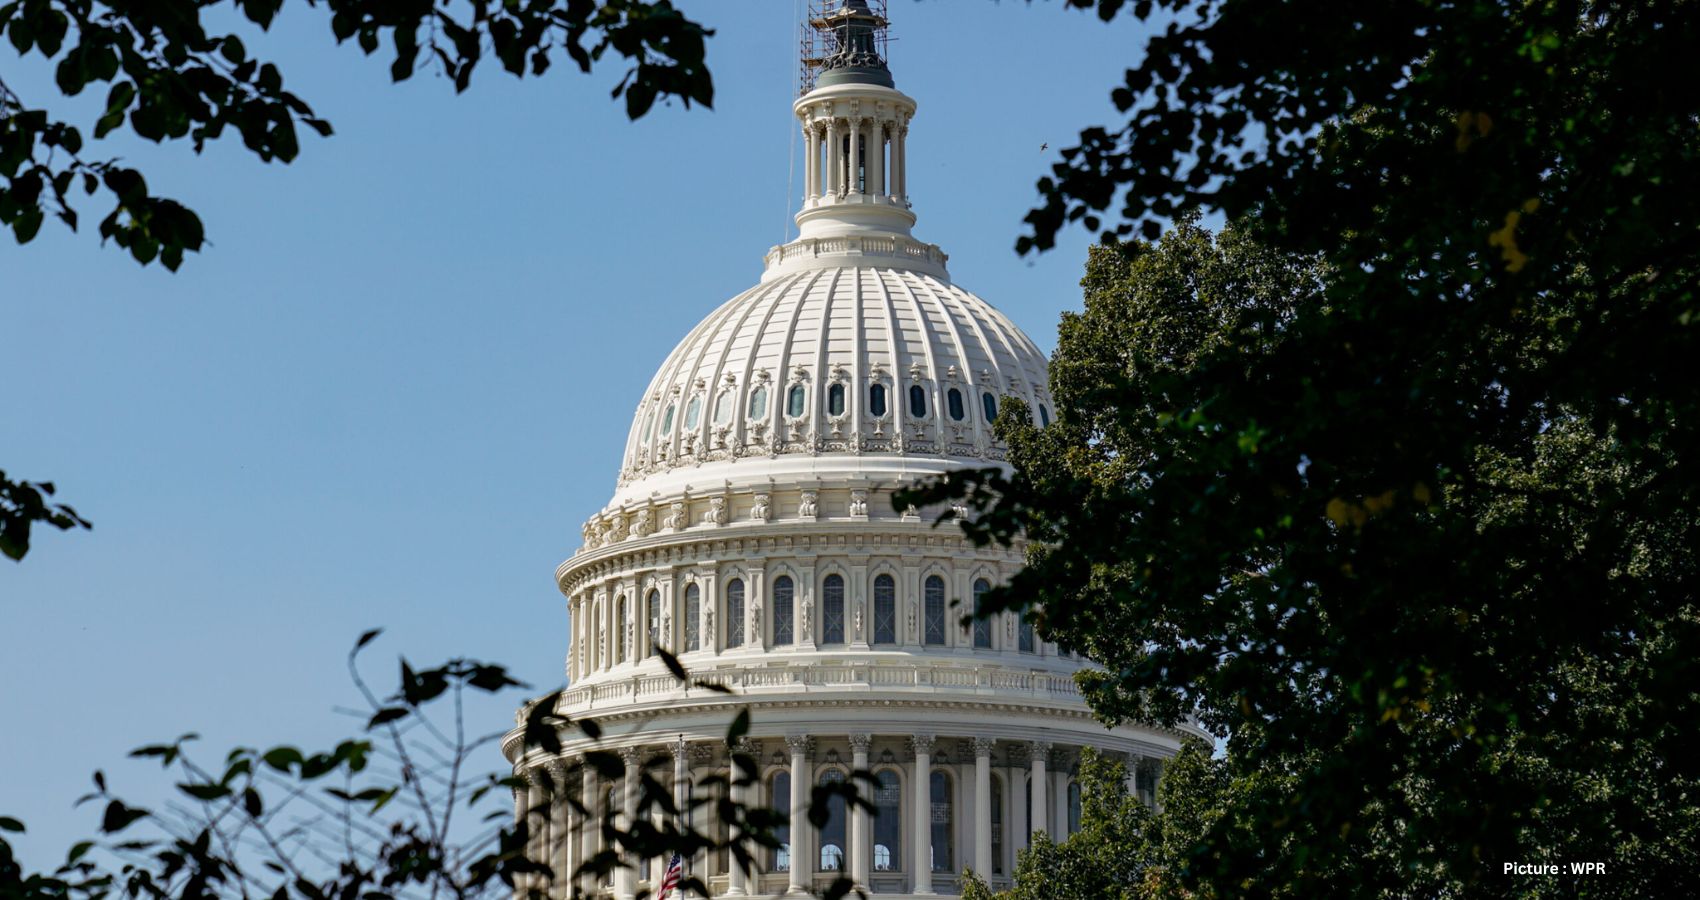 Child Tax Credit Expansion Bill Gains Momentum in Bipartisan Push Through Legislative Channels